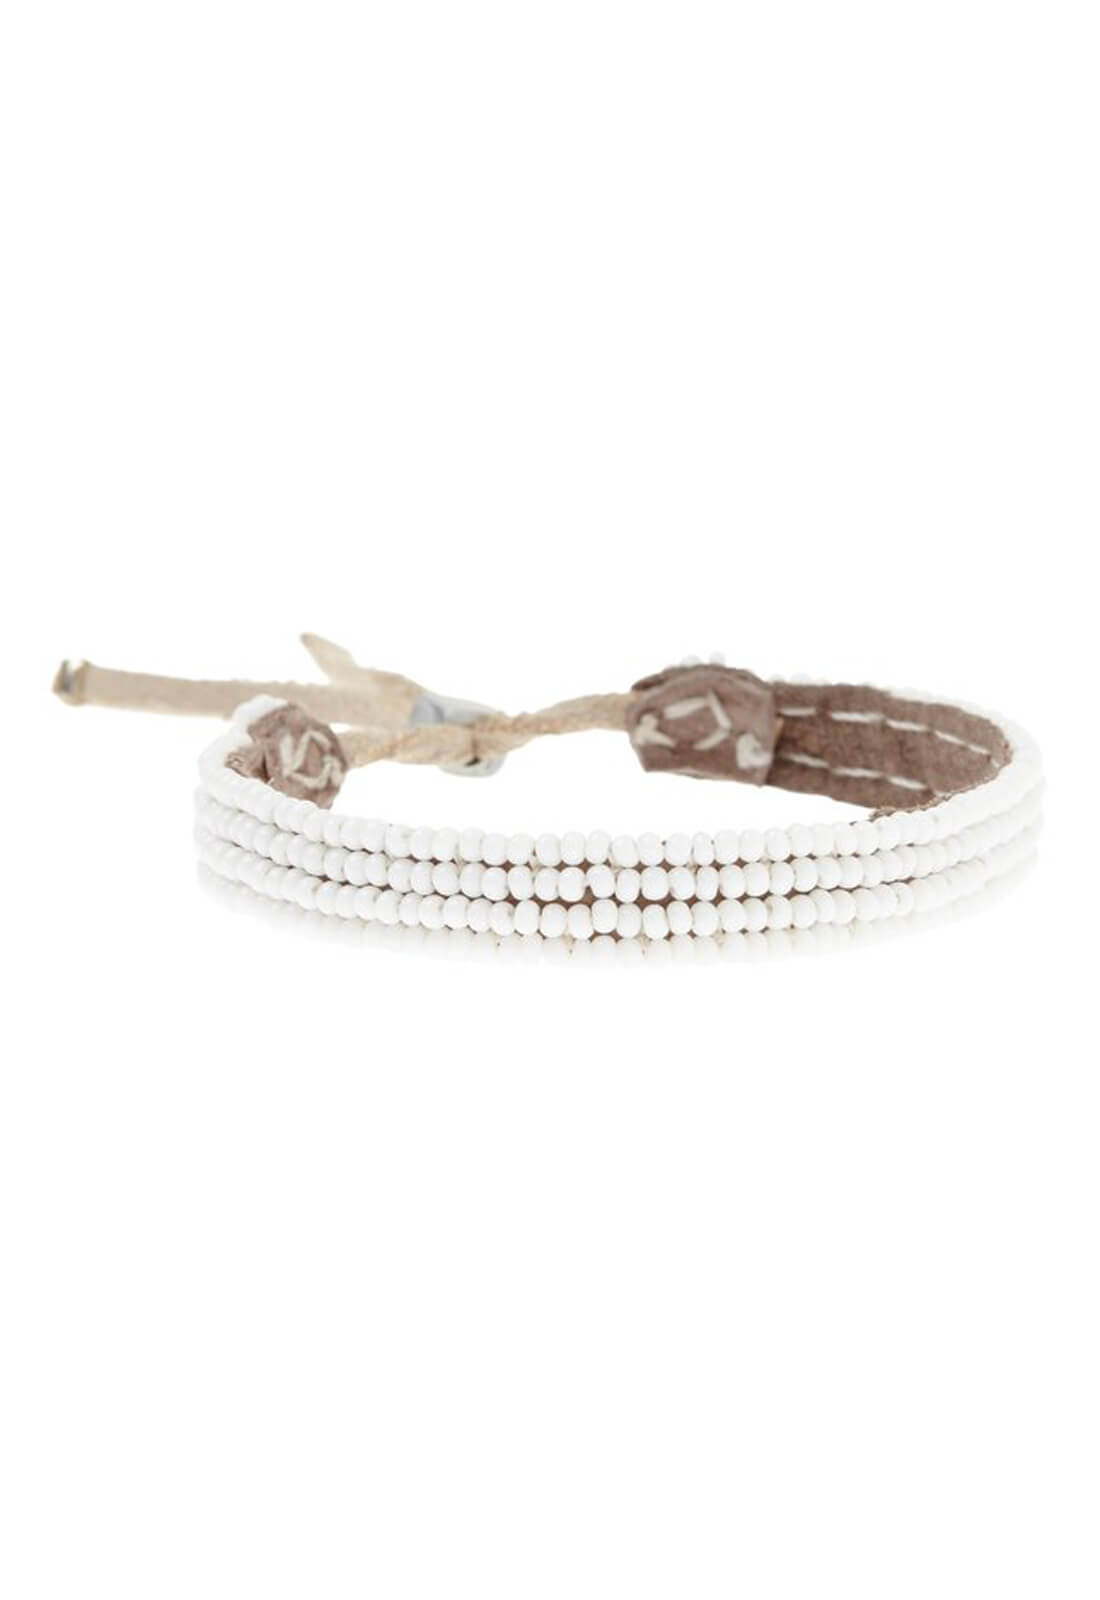 Beaded Leather Bracelet with Adjustable Closure - White